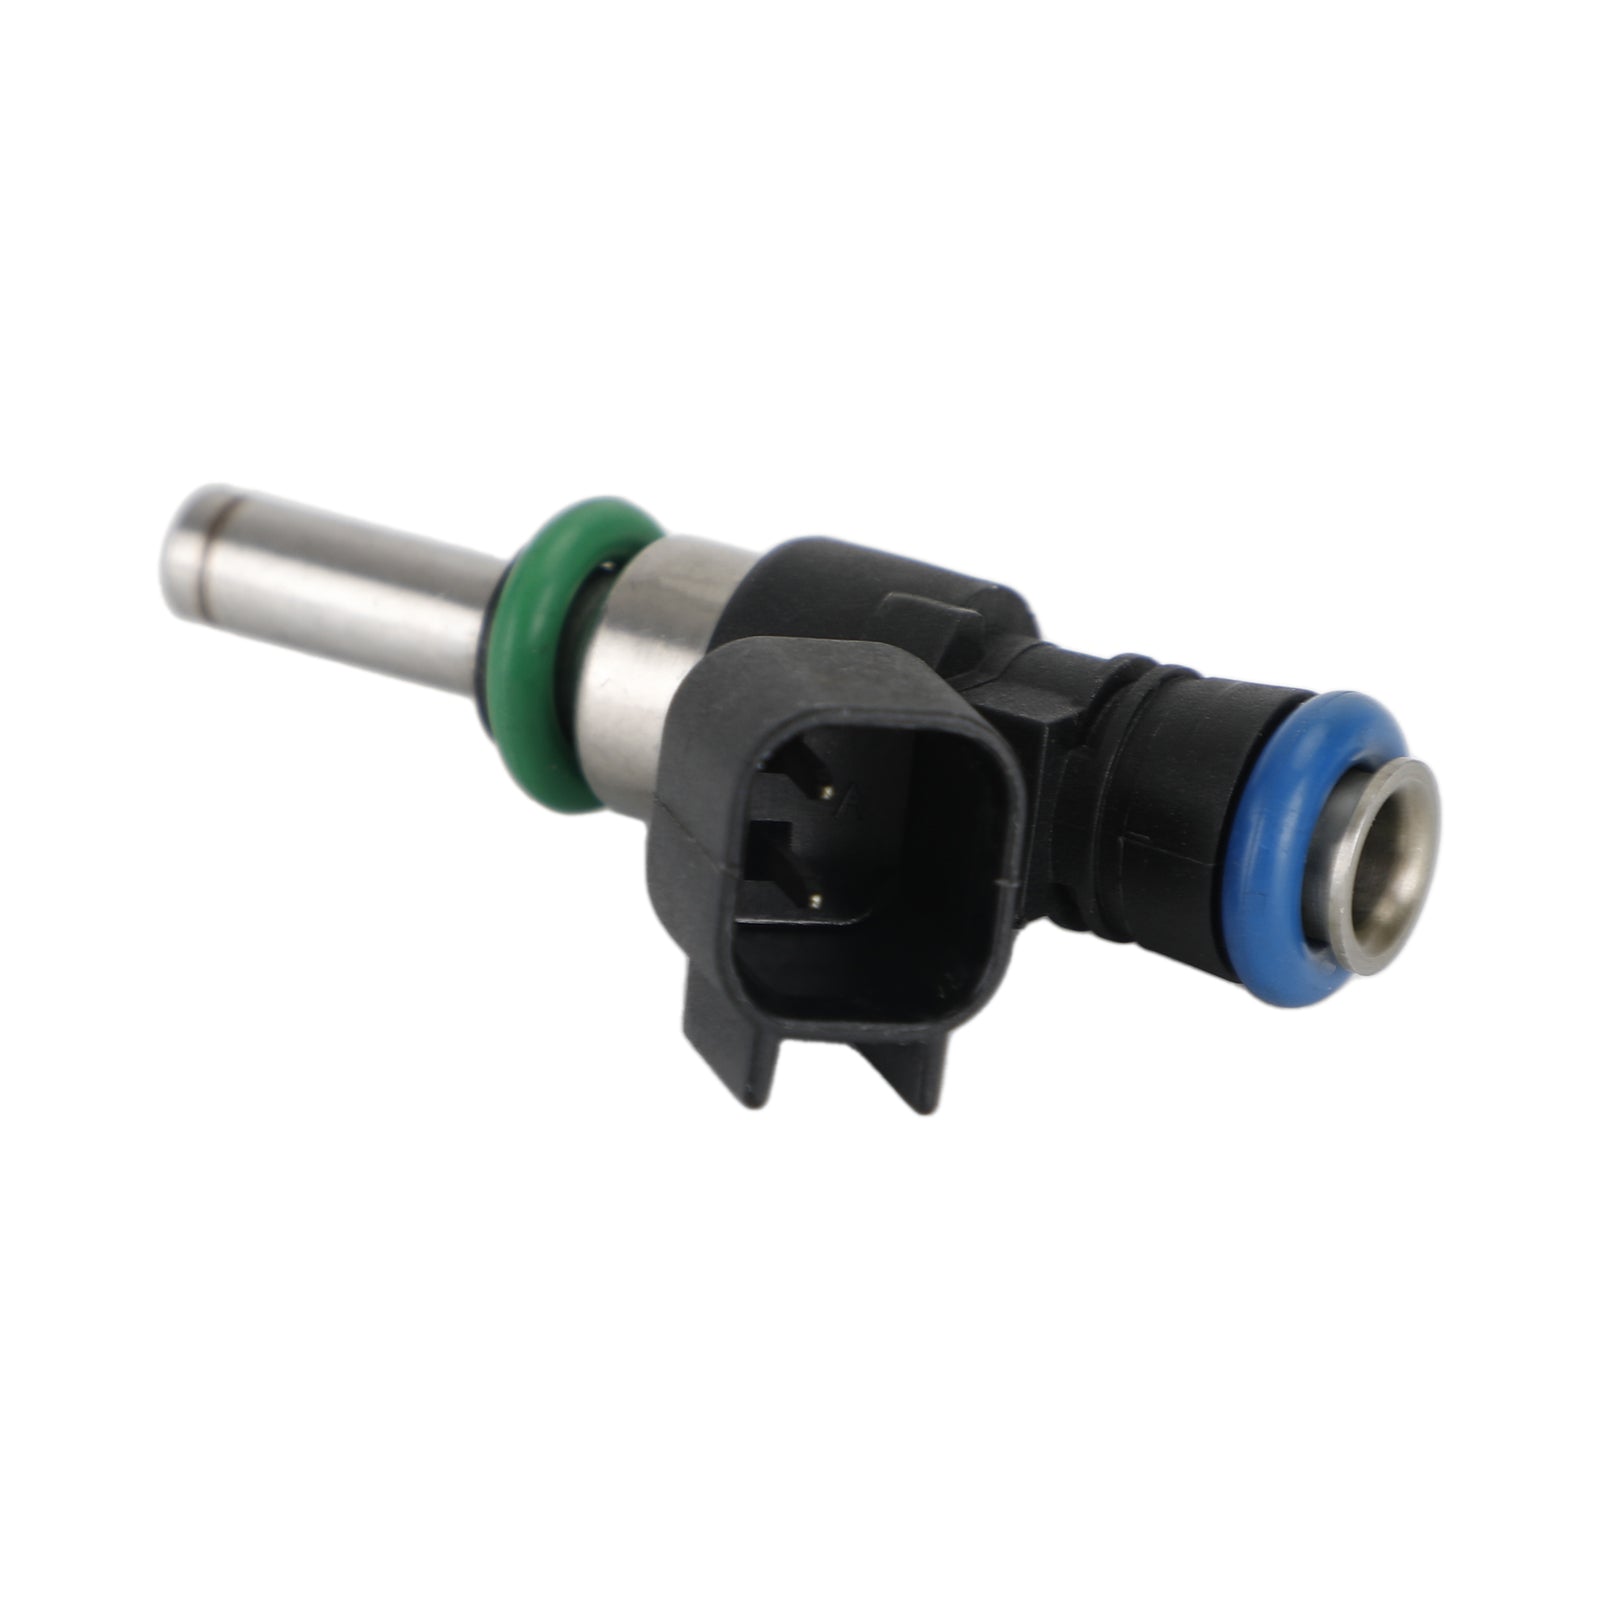 Fuel Injectors For Polaris General RZR RS1 XP1000 2014-2021 2521387 0280158337 Generic